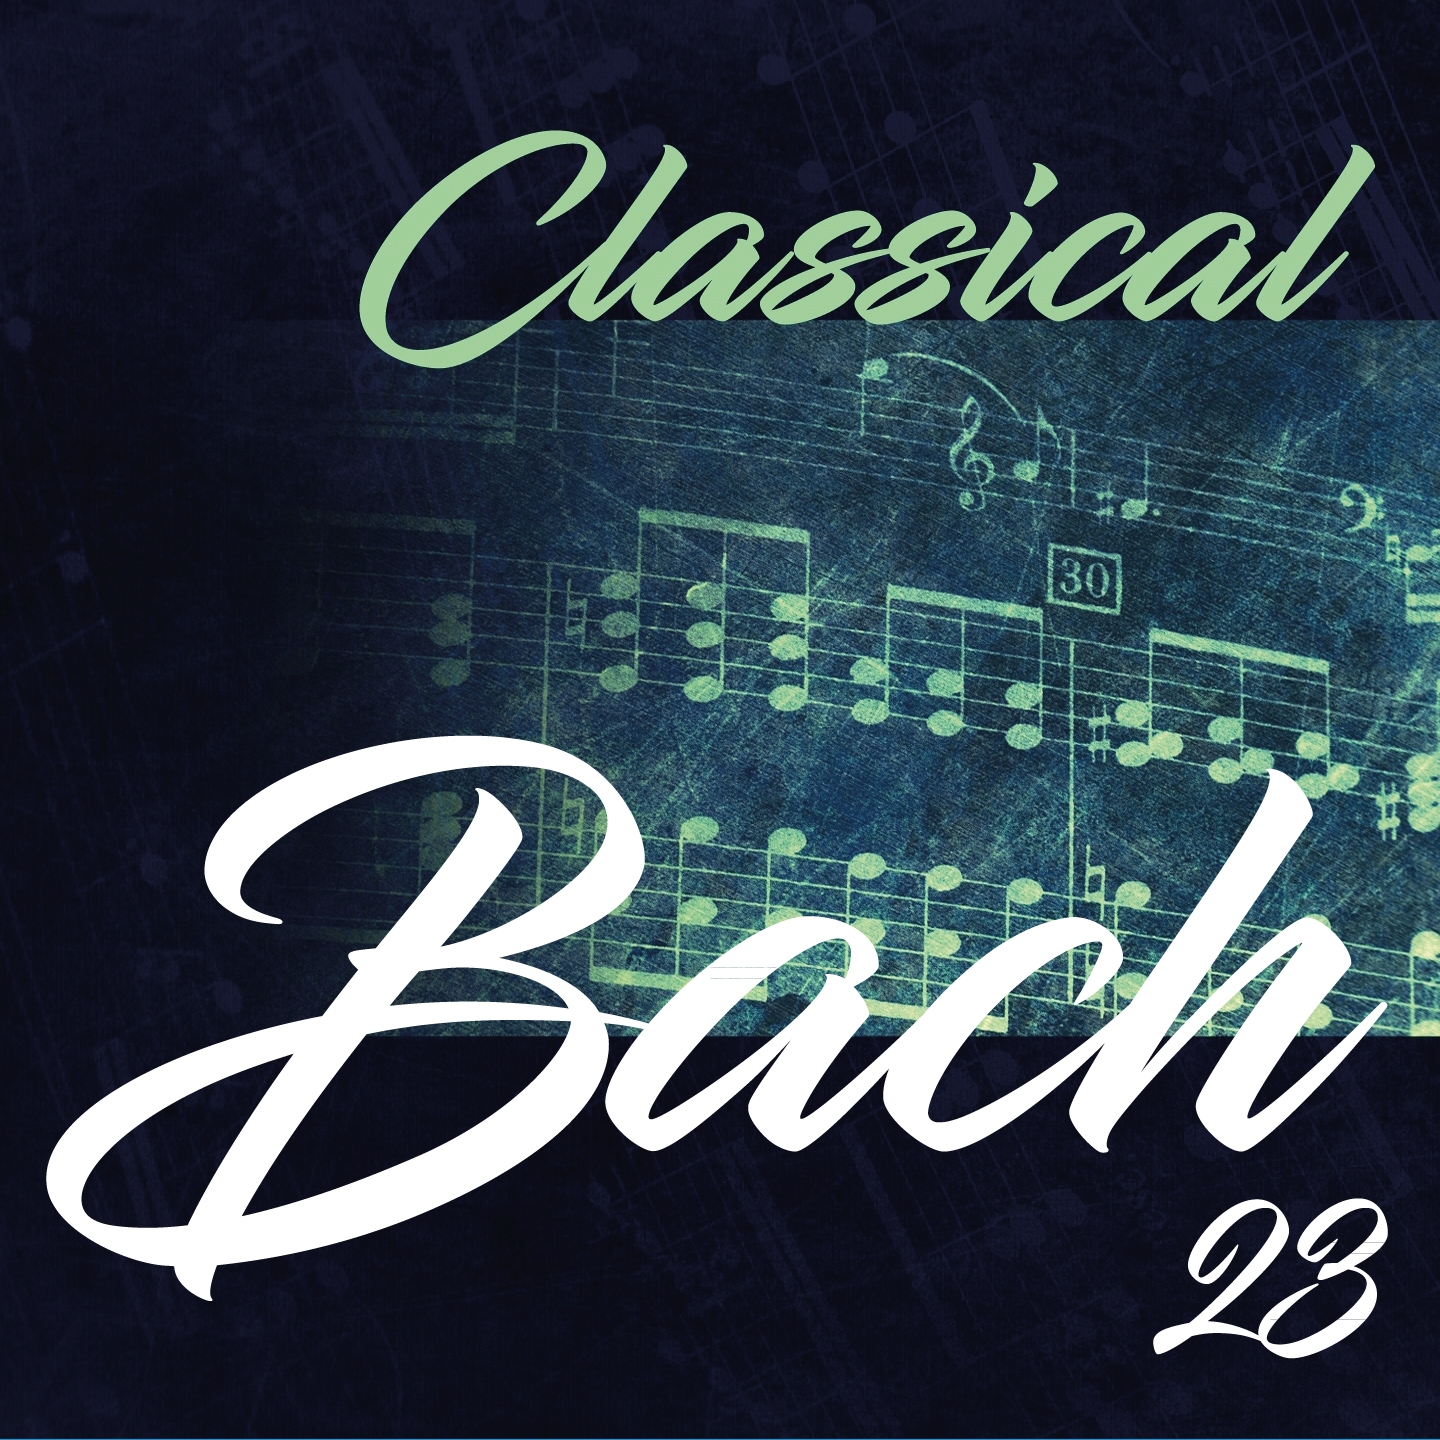 Classical Bach 23